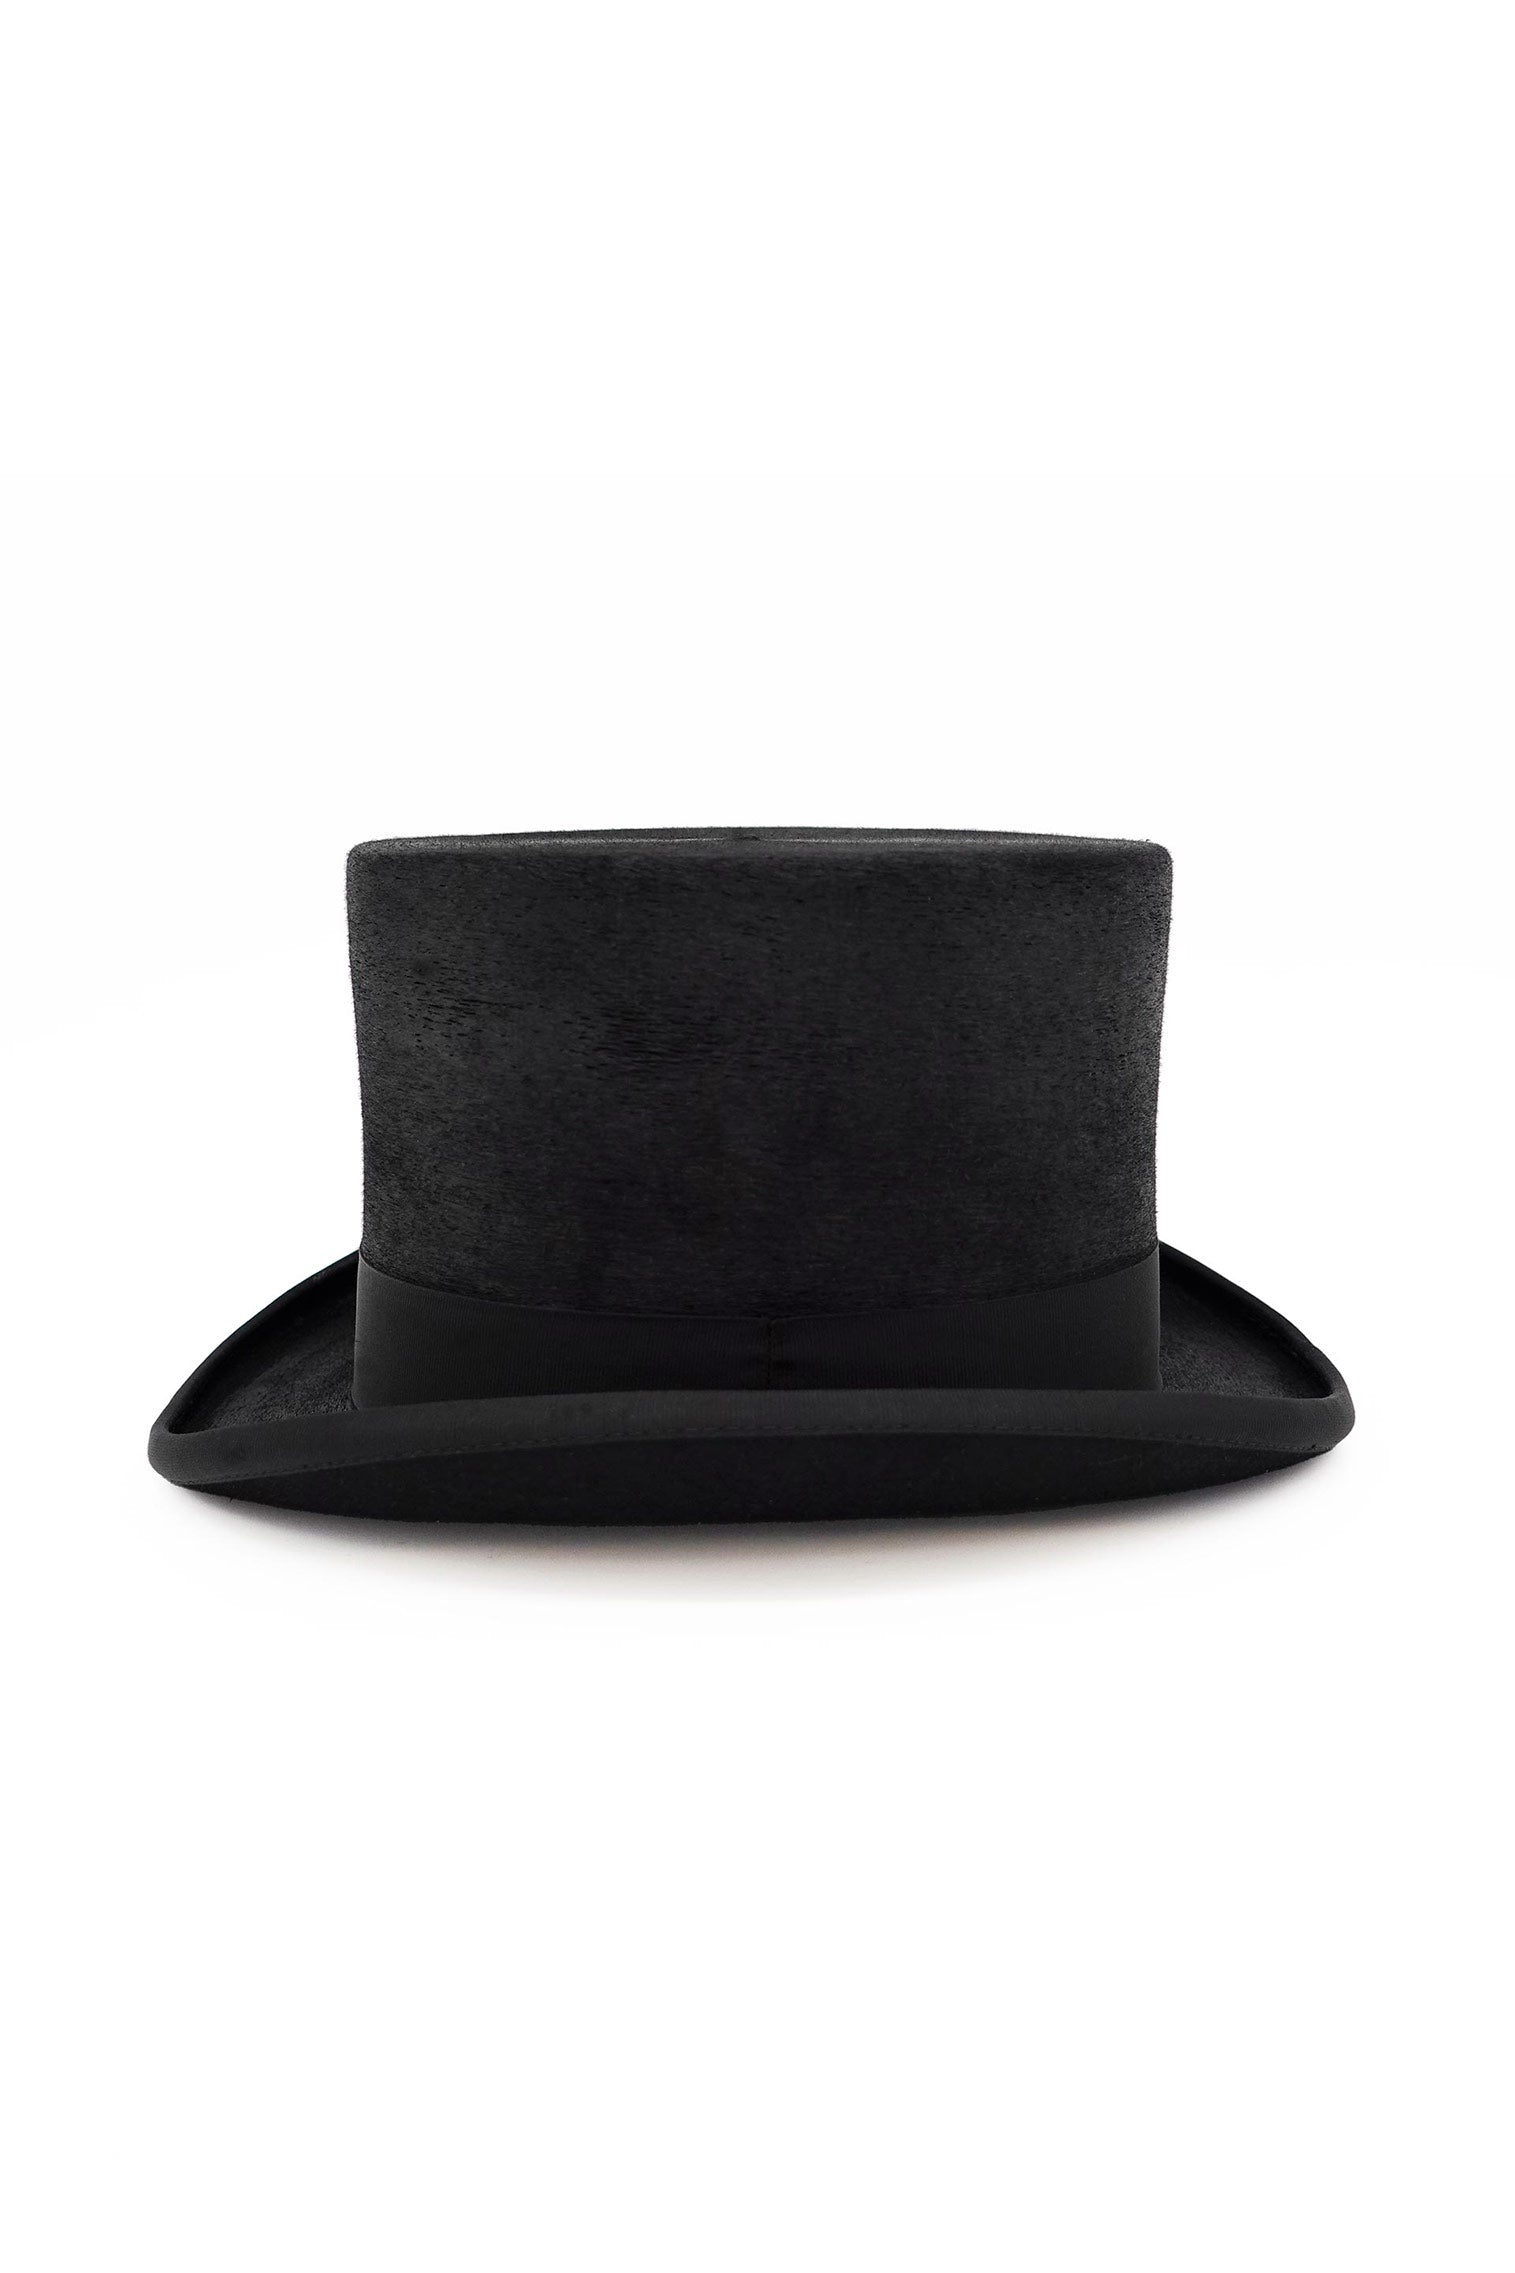 Mayfair Top Hat - New Season Hat Collection - Lock & Co. Hatters London UK